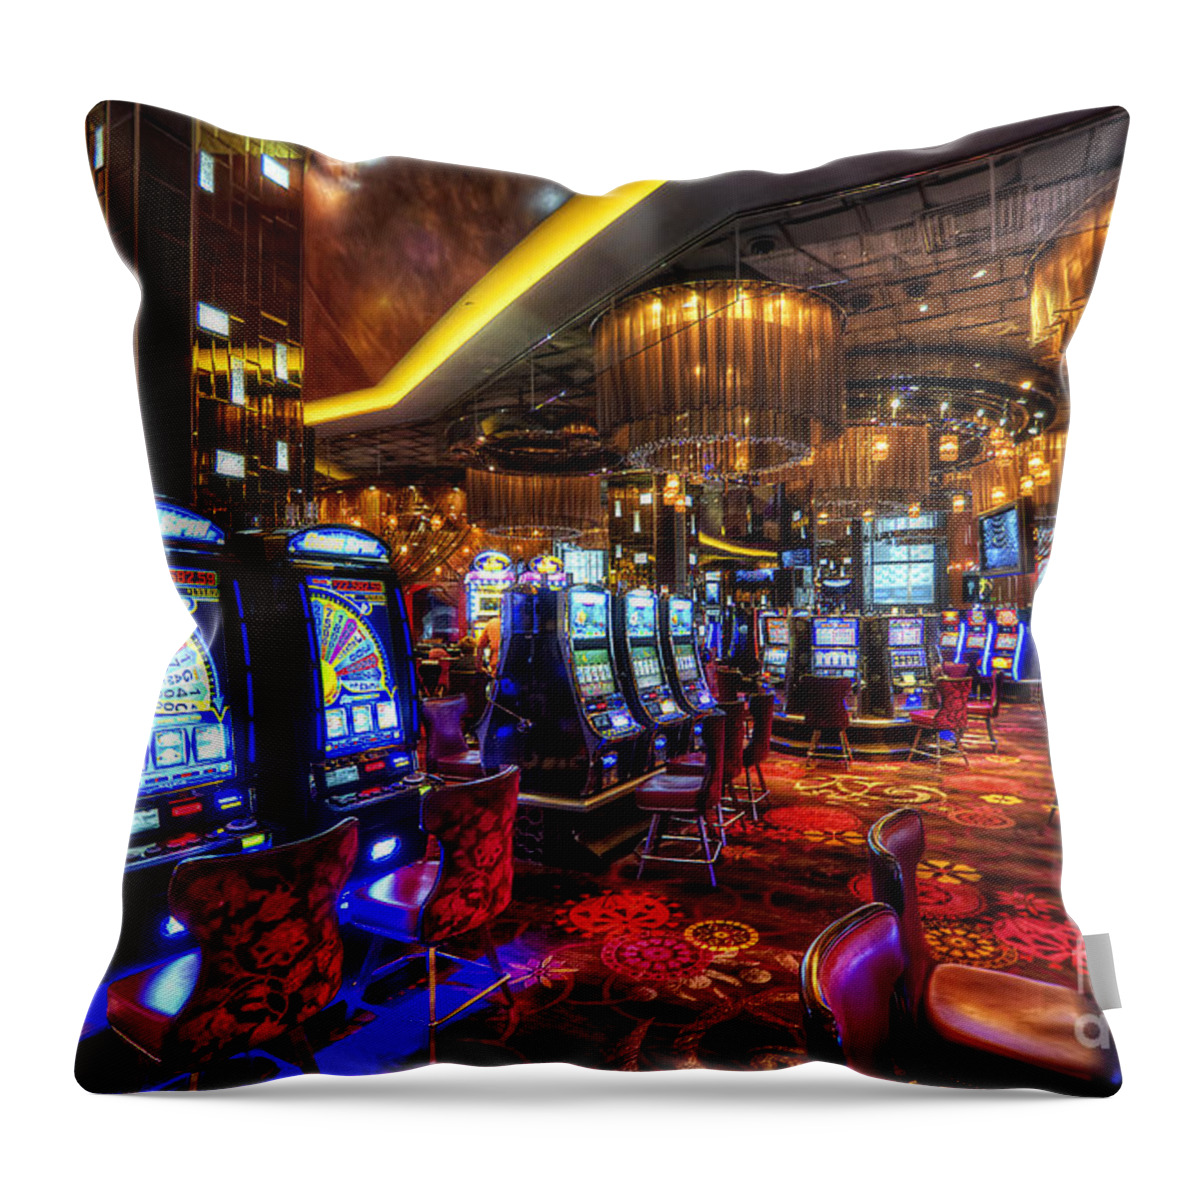 Art Throw Pillow featuring the photograph Vegas Slot Machines by Yhun Suarez